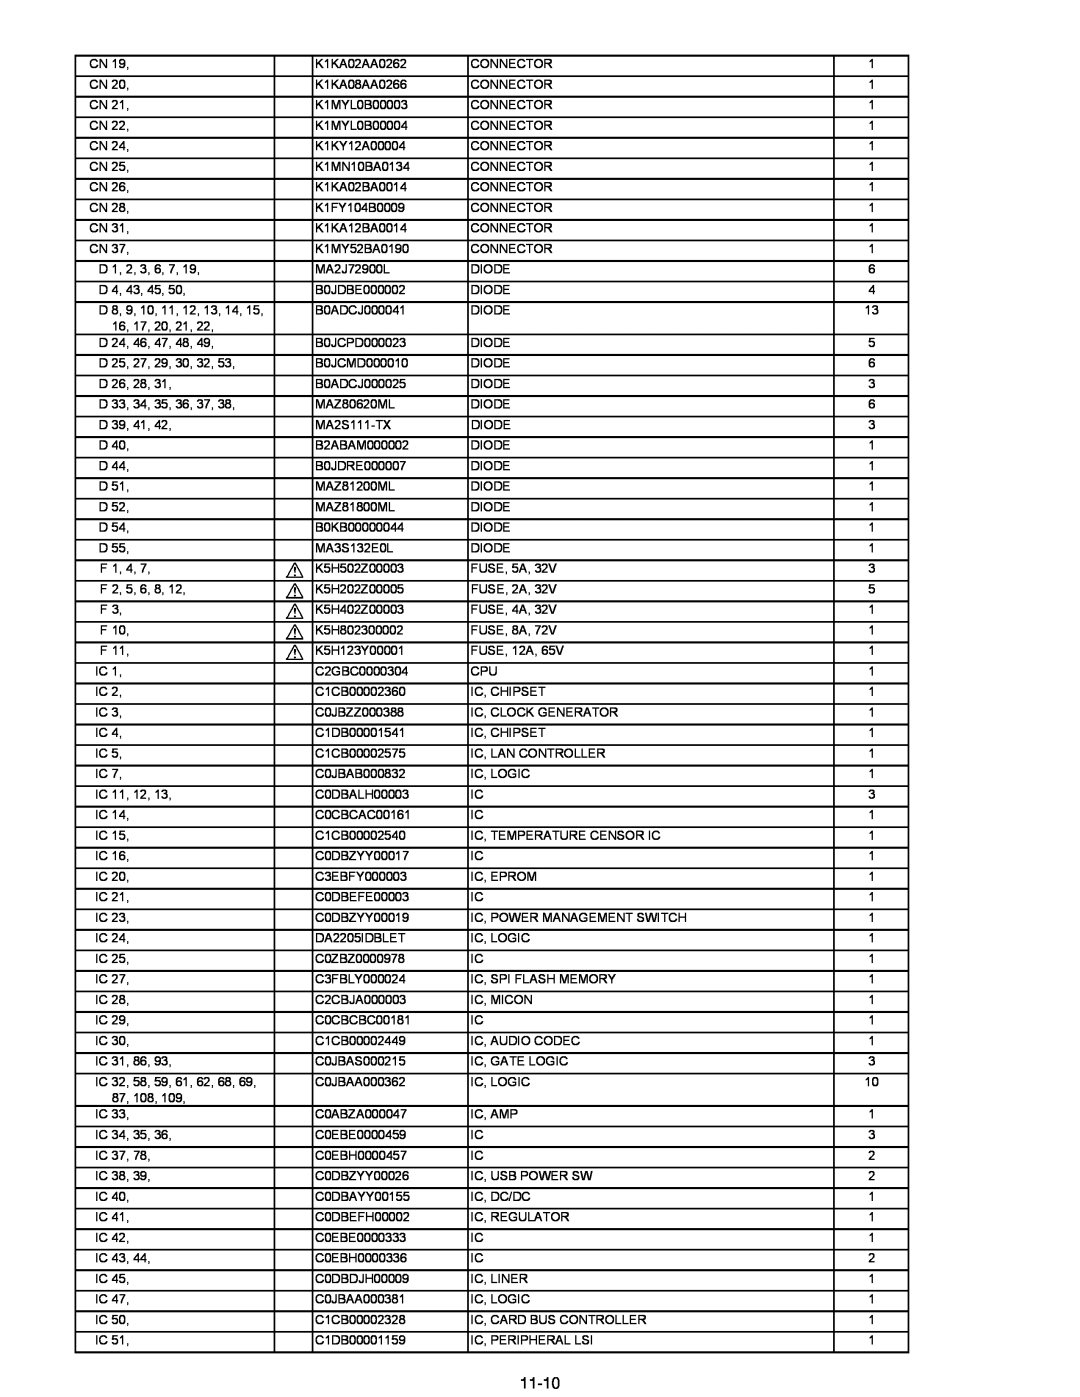 Matsushita CF-30 service manual 11-10, D 8, 9, 10, 11, 12, 13, 14, IC 32, 58, 59, 61, 62, 68 